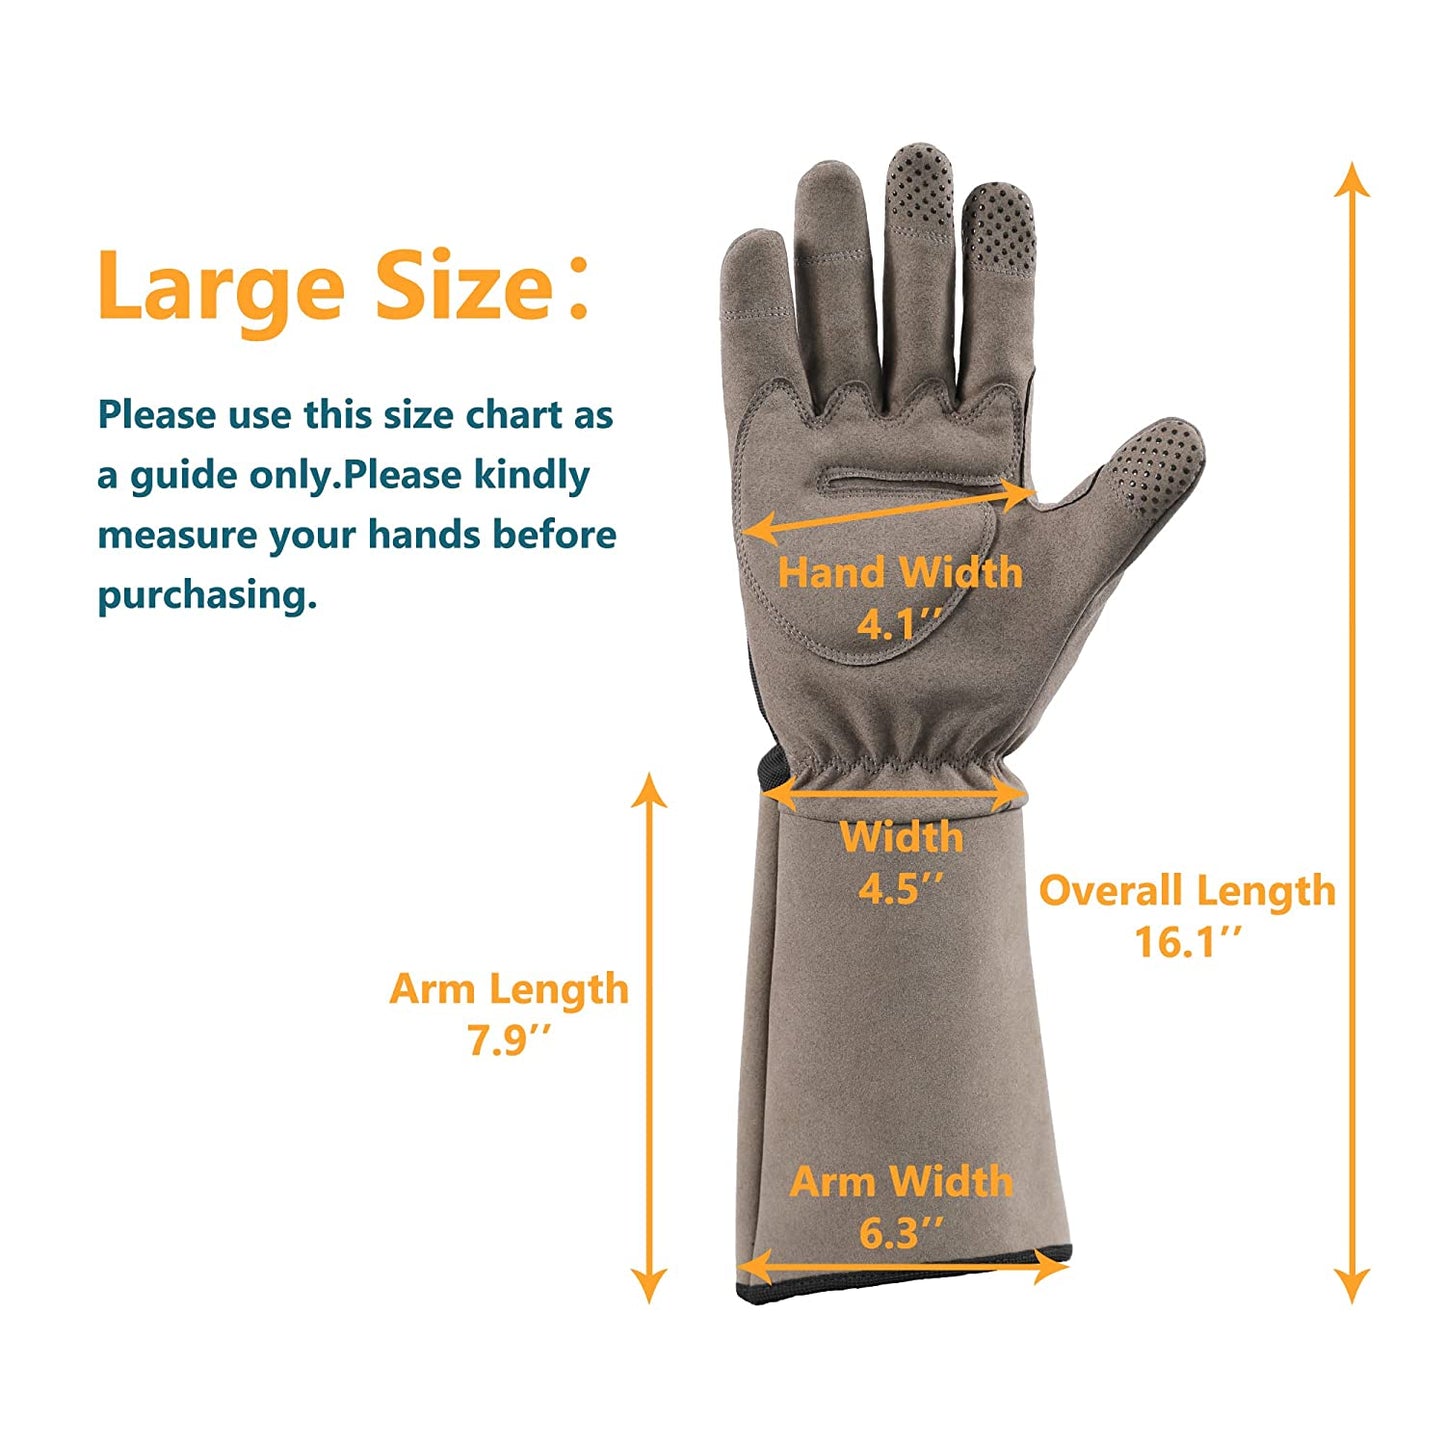 Thornproof Long Sleeve Garden Gloves | COOLJOB Large( Pack of 1) / Orange